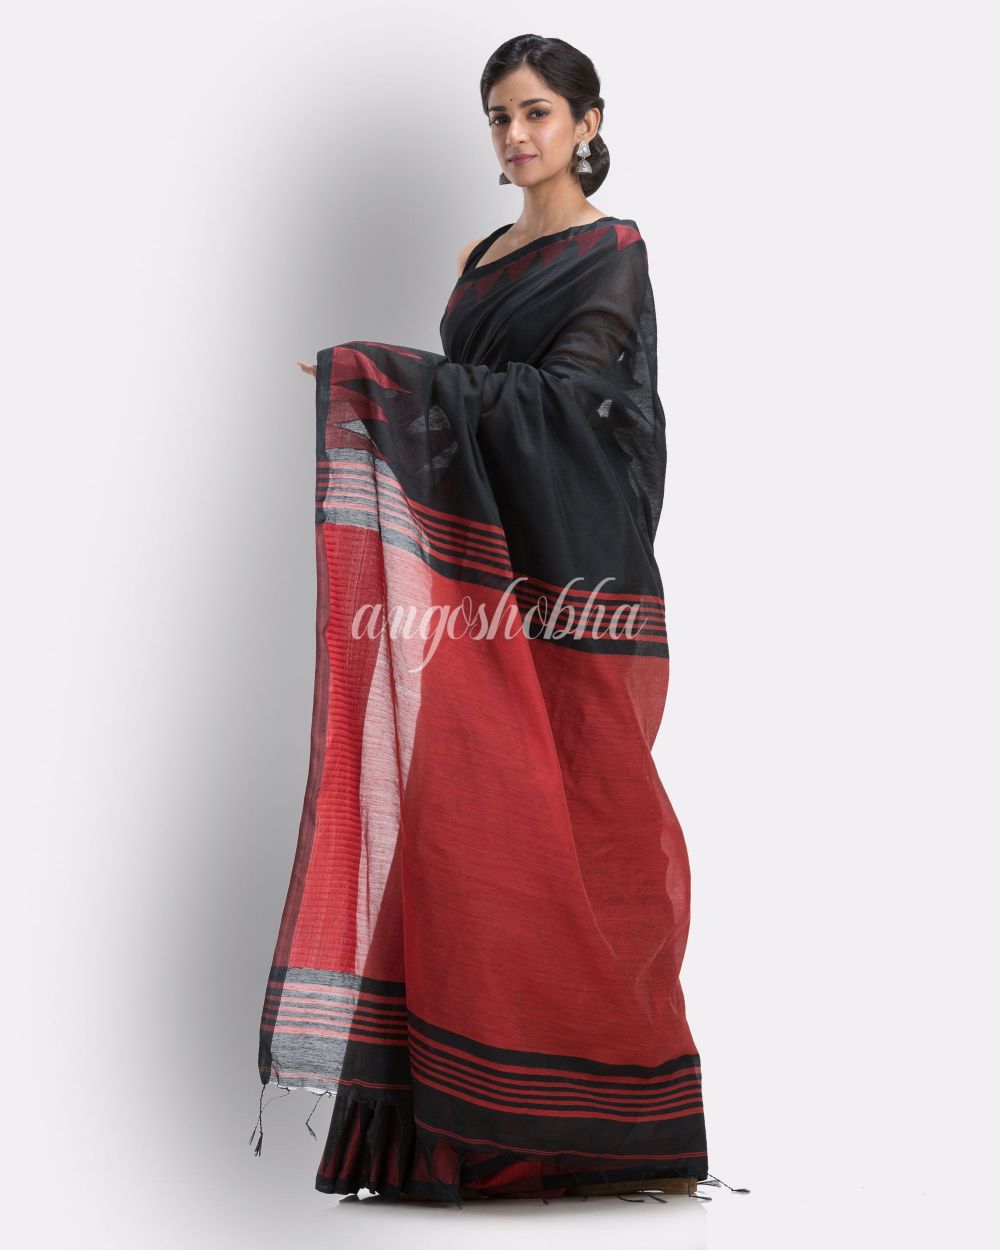 Black Handloom Cotton blend Saree angoshobha